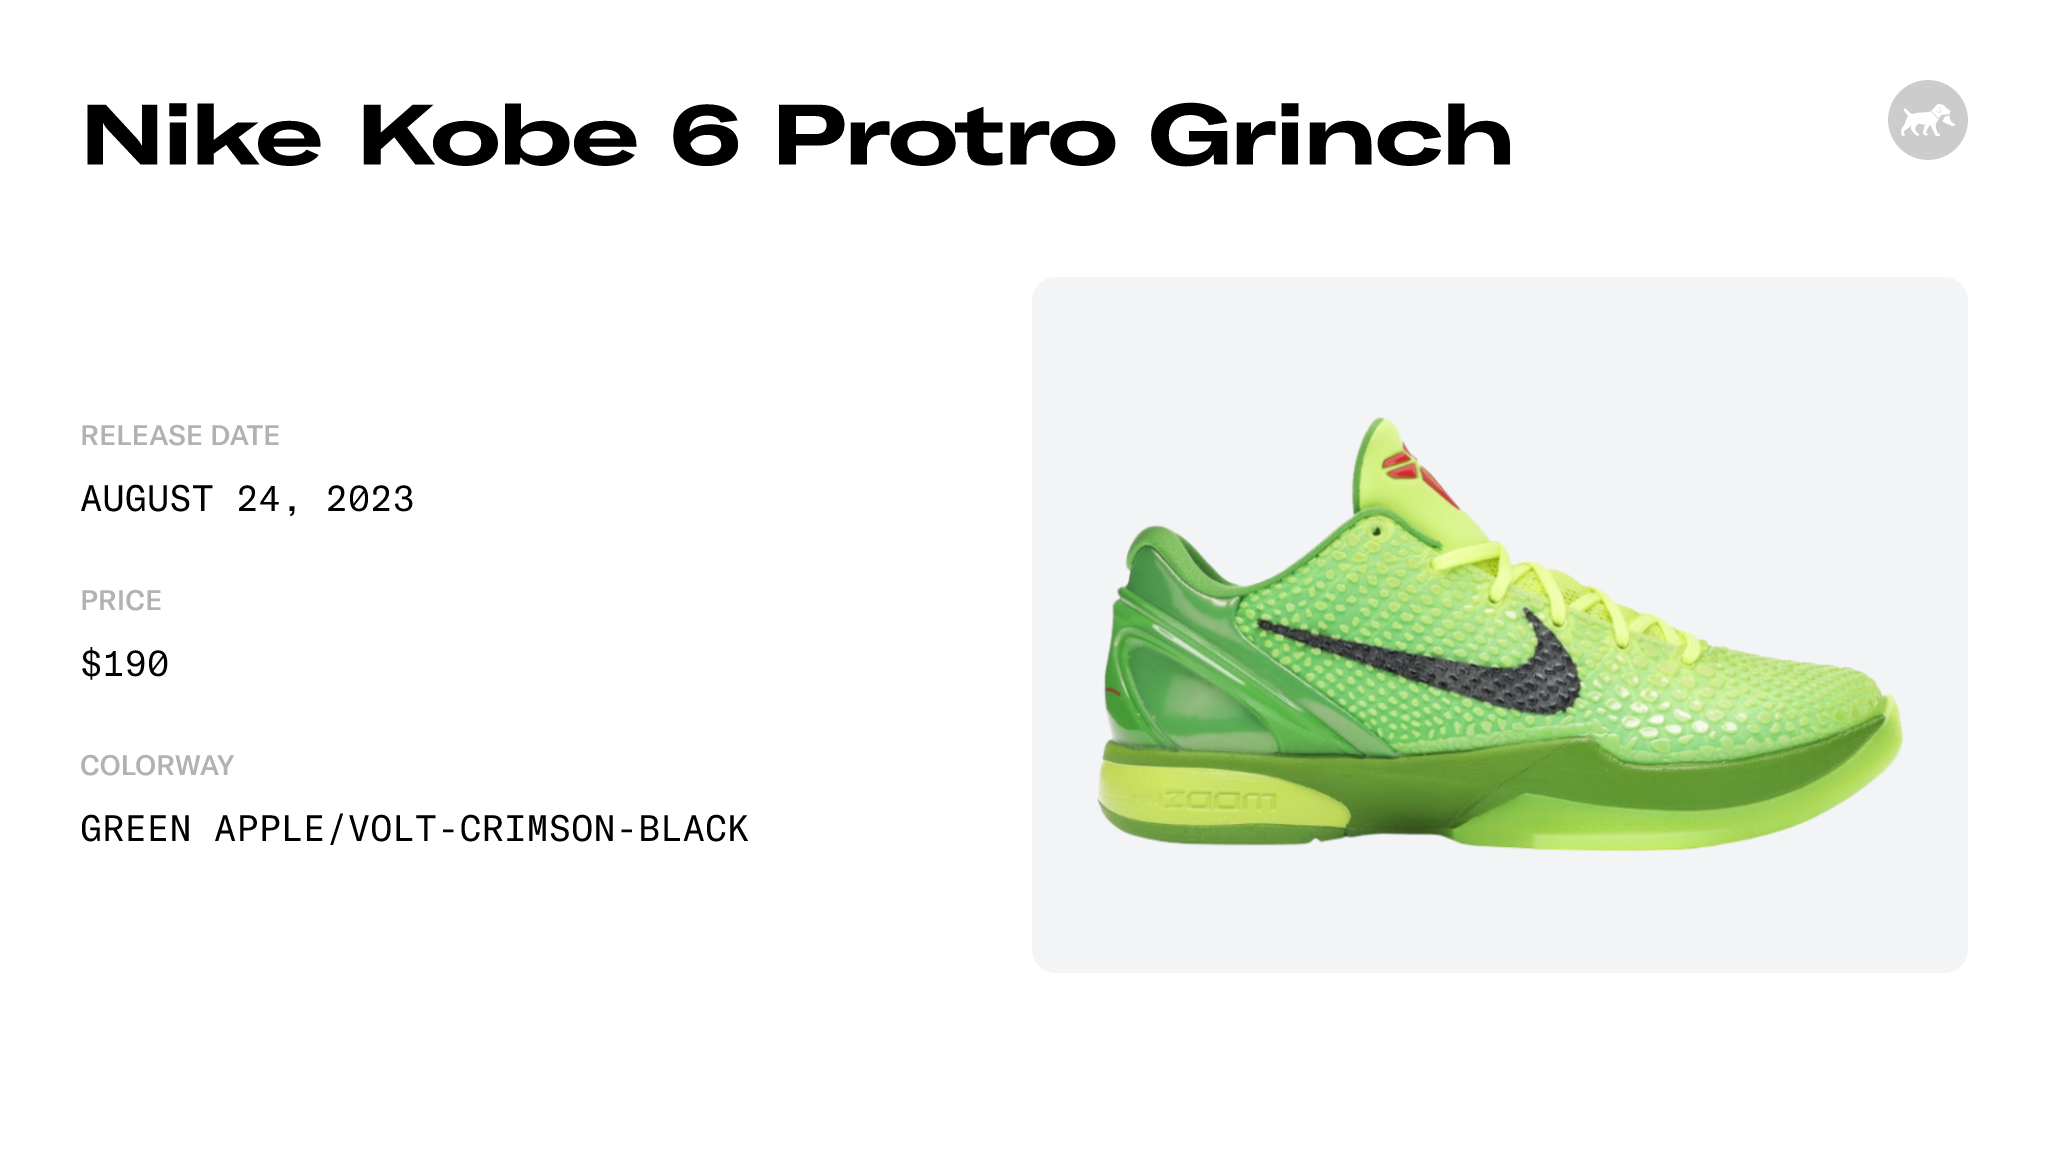 Nike Kobe 6 Protro Grinch - CW2190-300 Raffles and Release Date